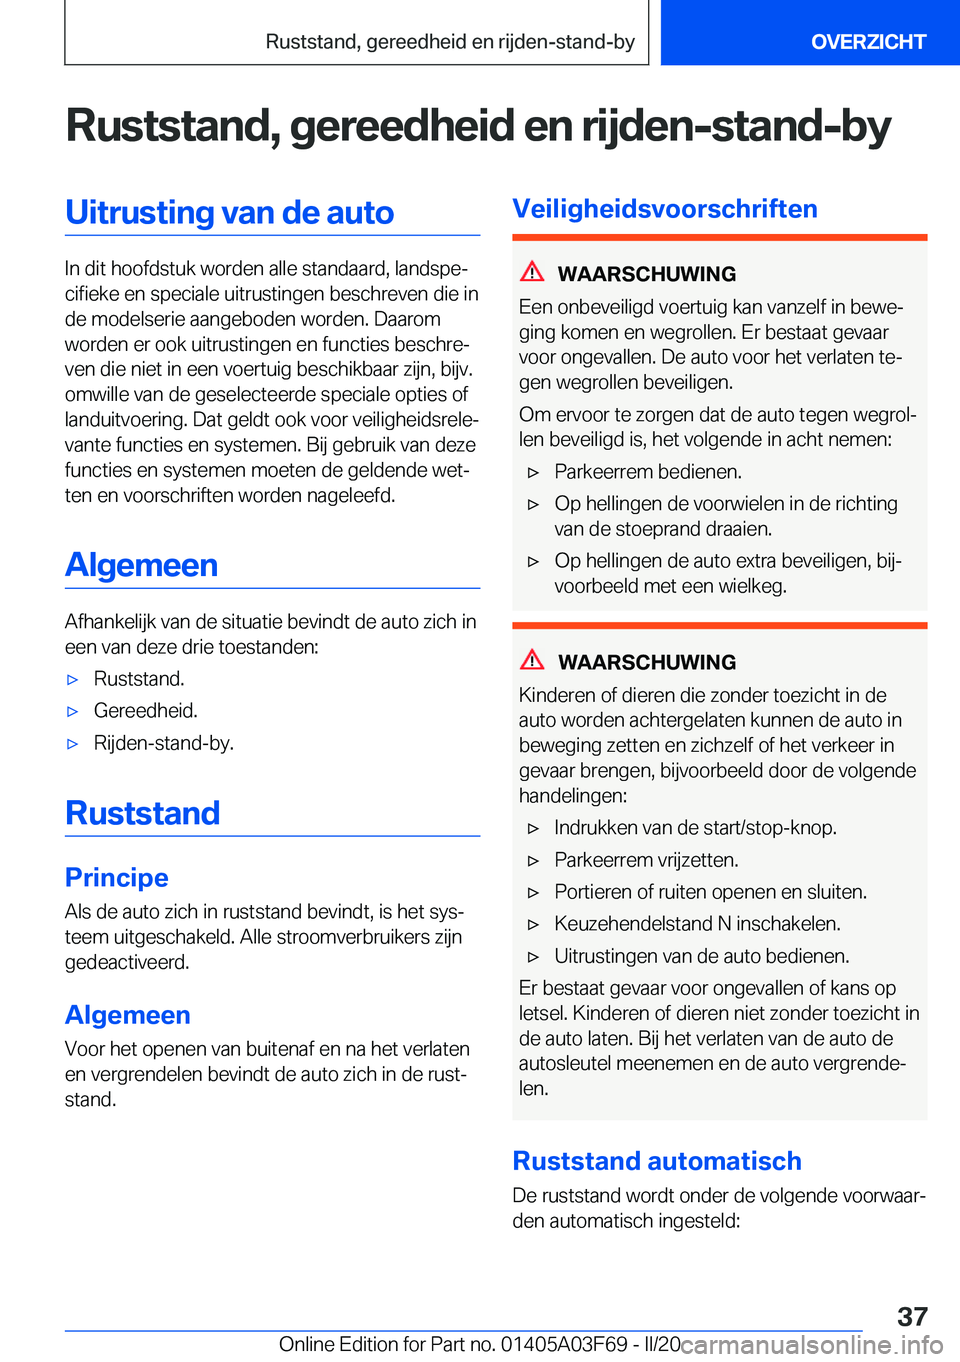 BMW 3 SERIES 2020  Instructieboekjes (in Dutch) �R�u�s�t�s�t�a�n�d�,��g�e�r�e�e�d�h�e�i�d��e�n��r�i�j�d�e�n�-�s�t�a�n�d�-�b�y�U�i�t�r�u�s�t�i�n�g��v�a�n��d�e��a�u�t�o
�I�n��d�i�t��h�o�o�f�d�s�t�u�k��w�o�r�d�e�n��a�l�l�e��s�t�a�n�d�a�a�r�